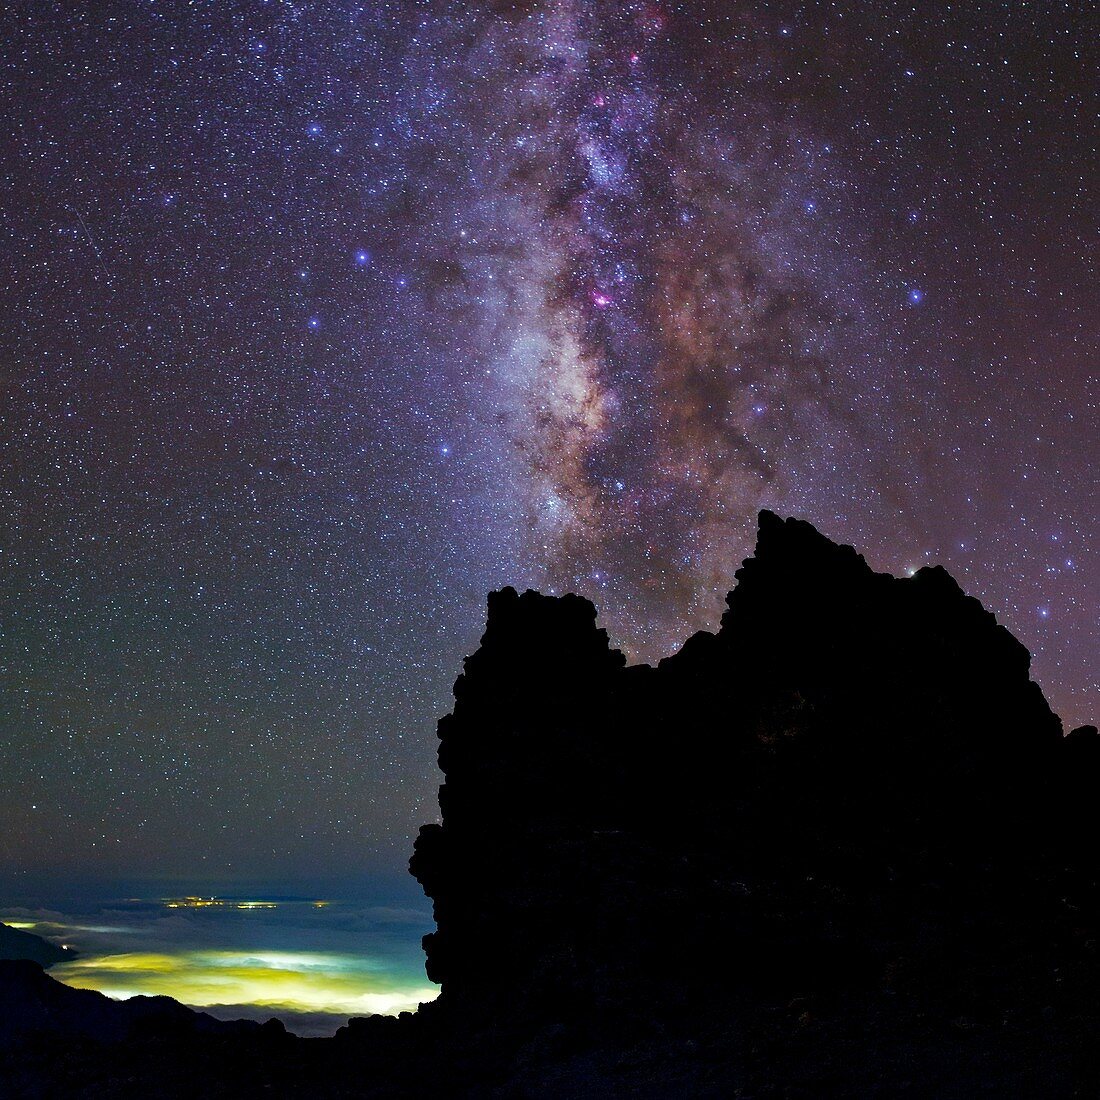 The Milky Way,Canary Islands